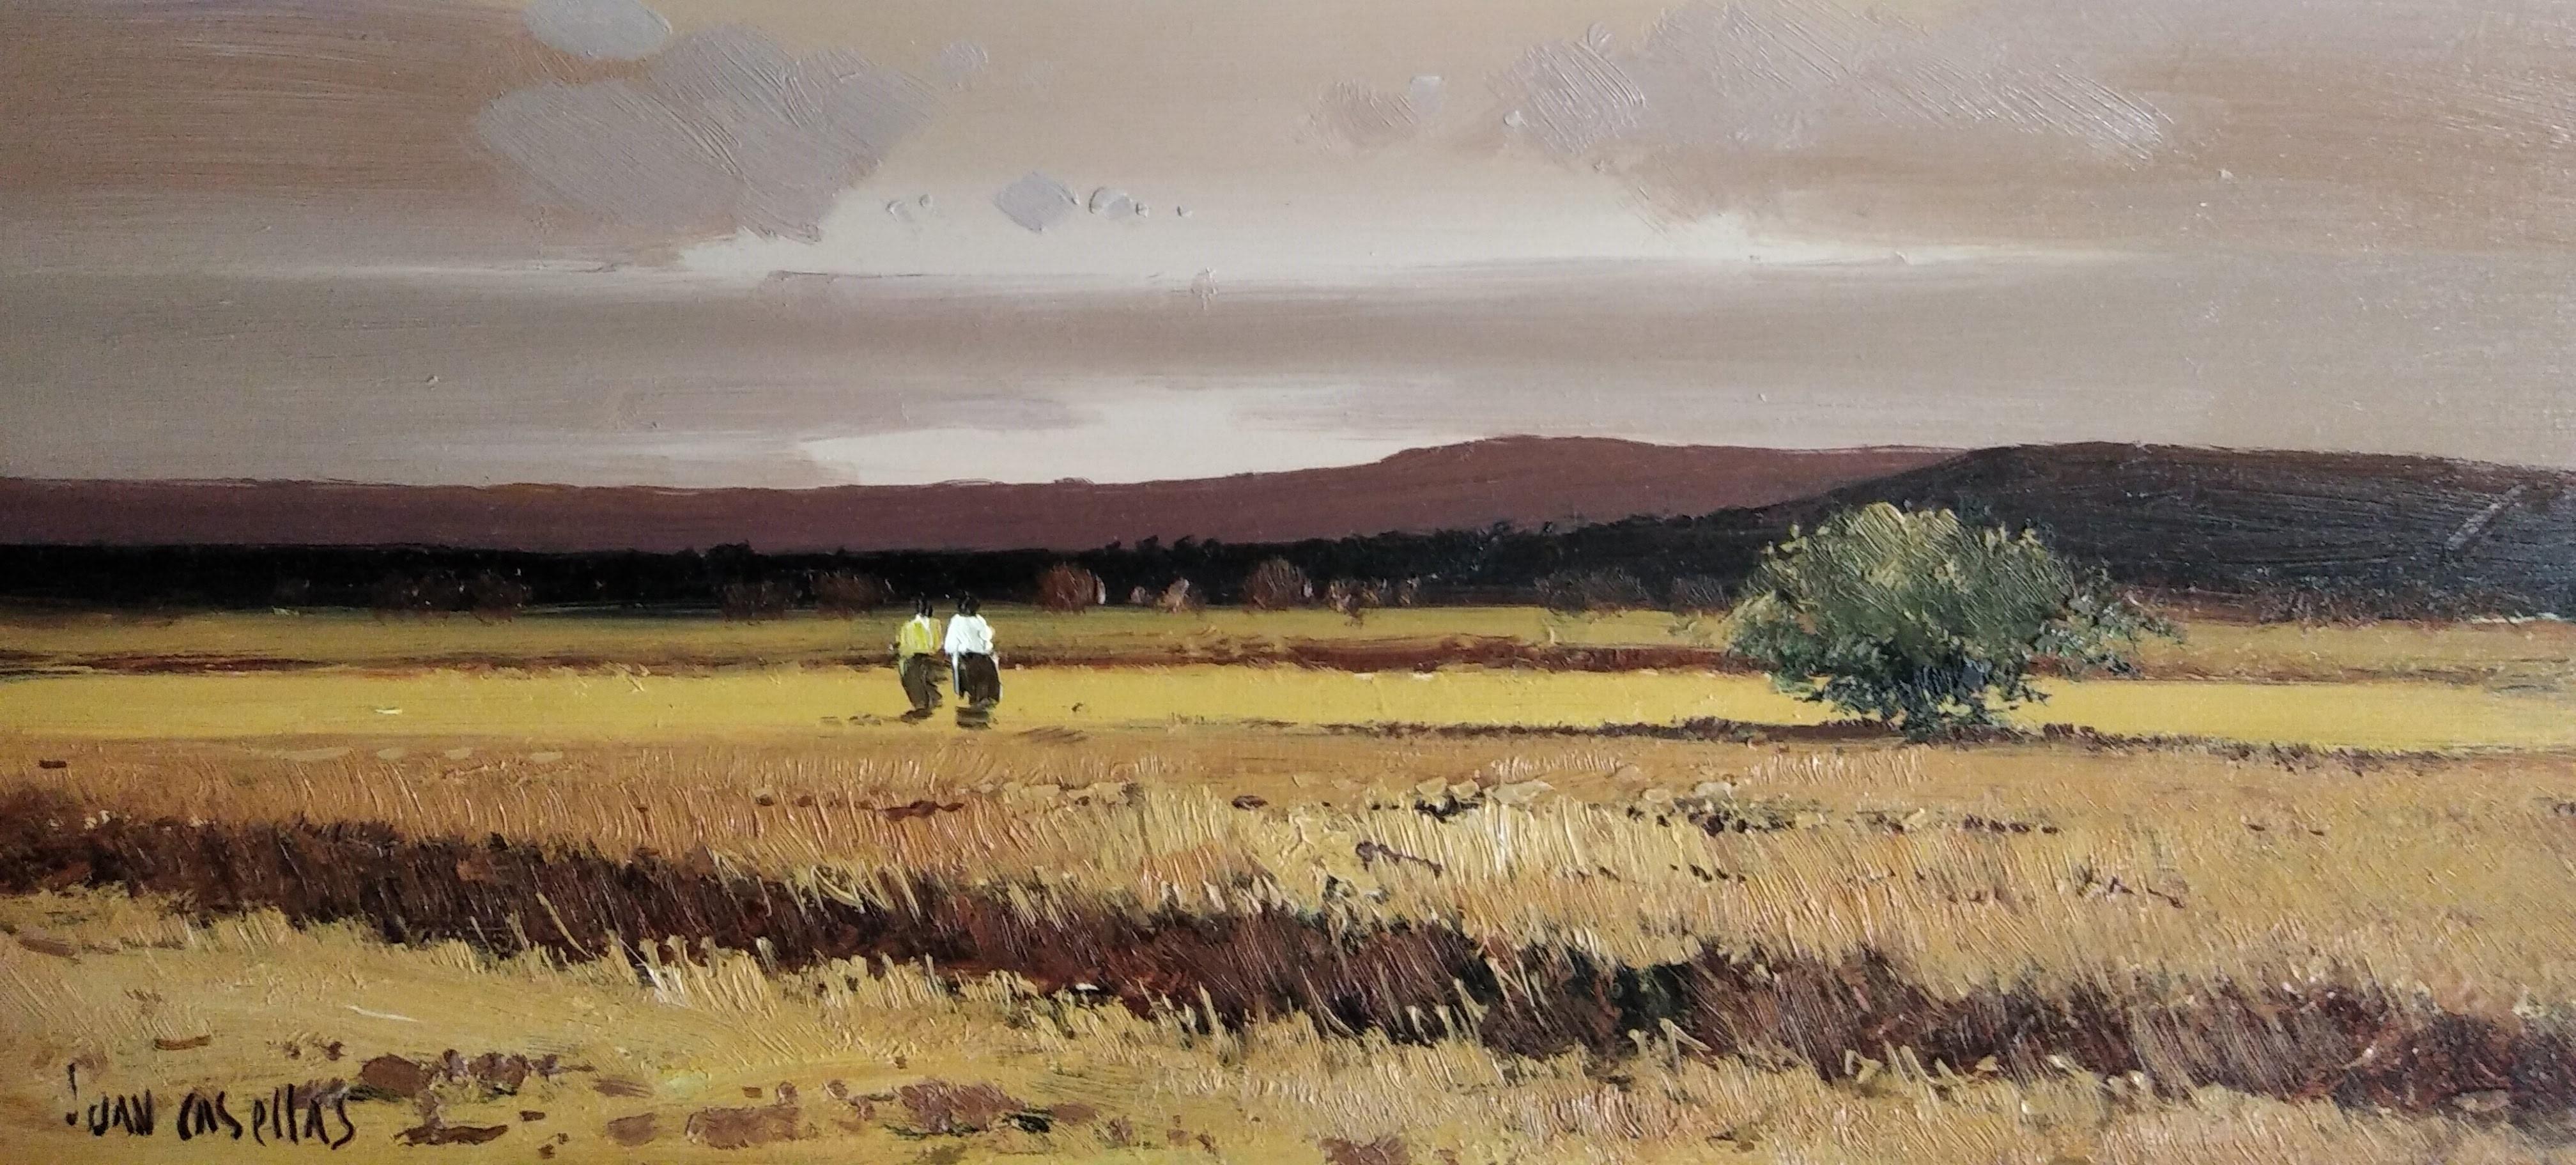 Juan Casellas  Landscape Painting - Untitled 